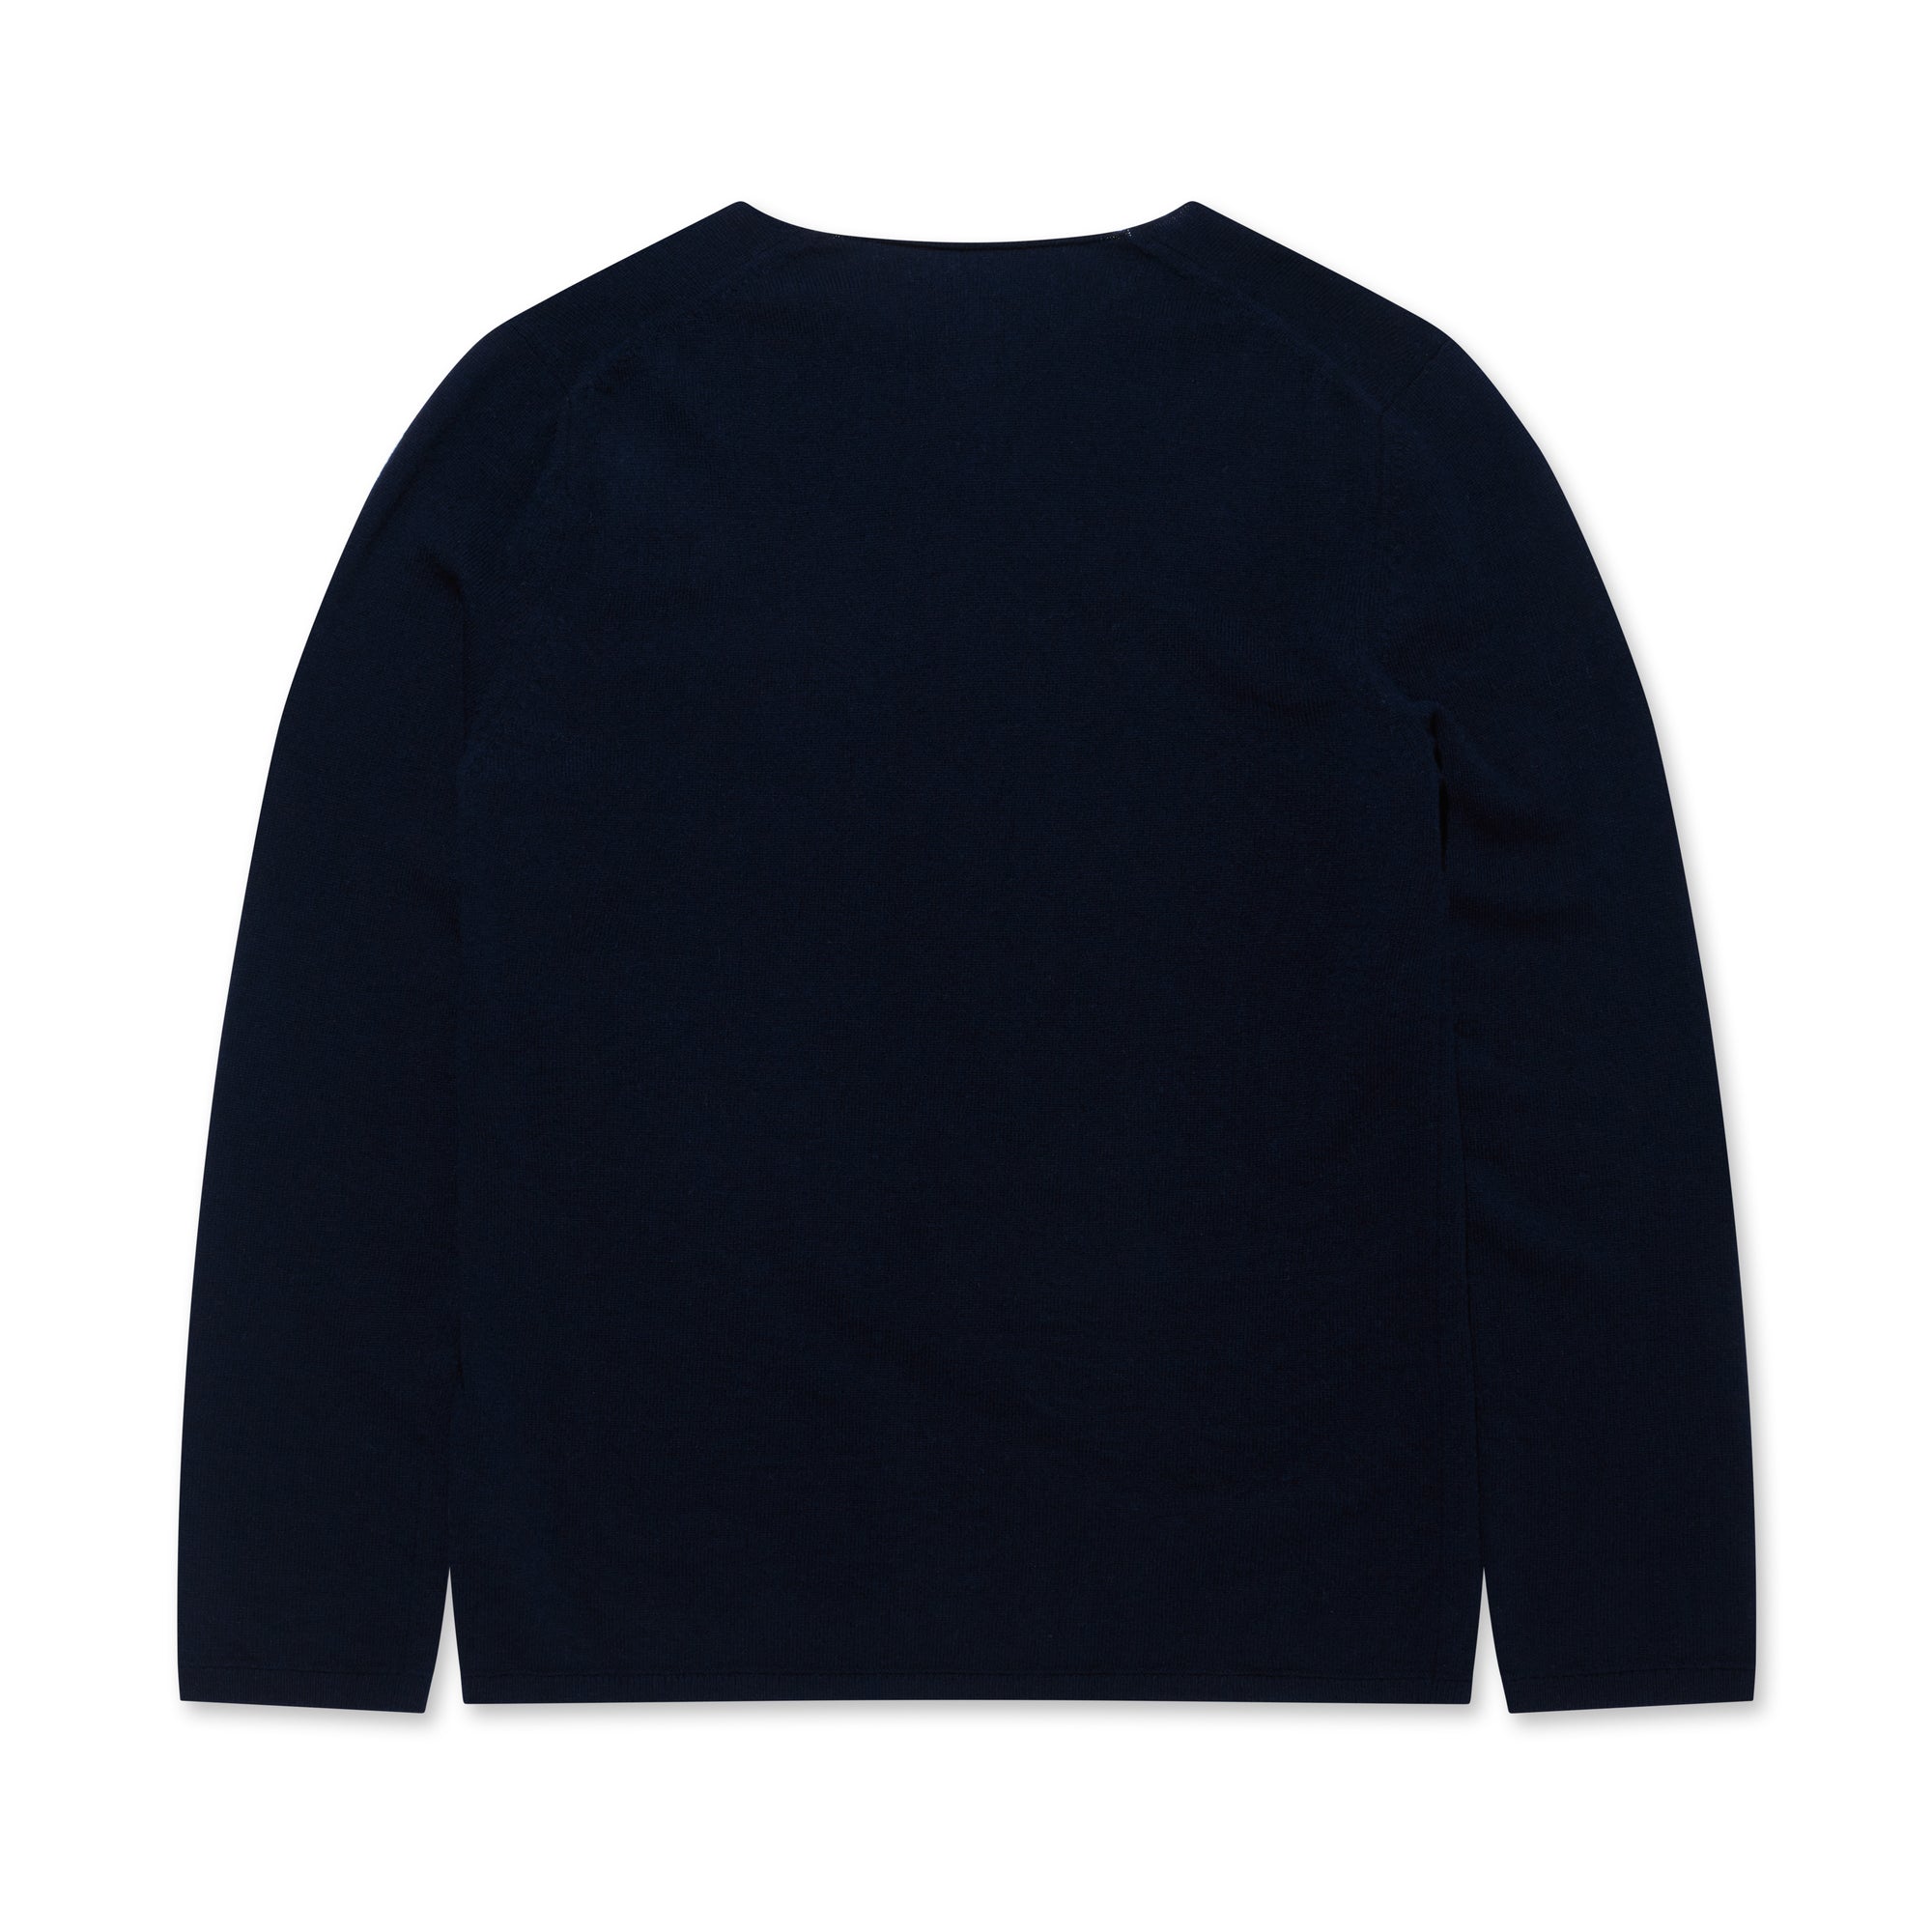 CDG Shirt - Lacoste Men's Knit Sweater - (Black) view 6